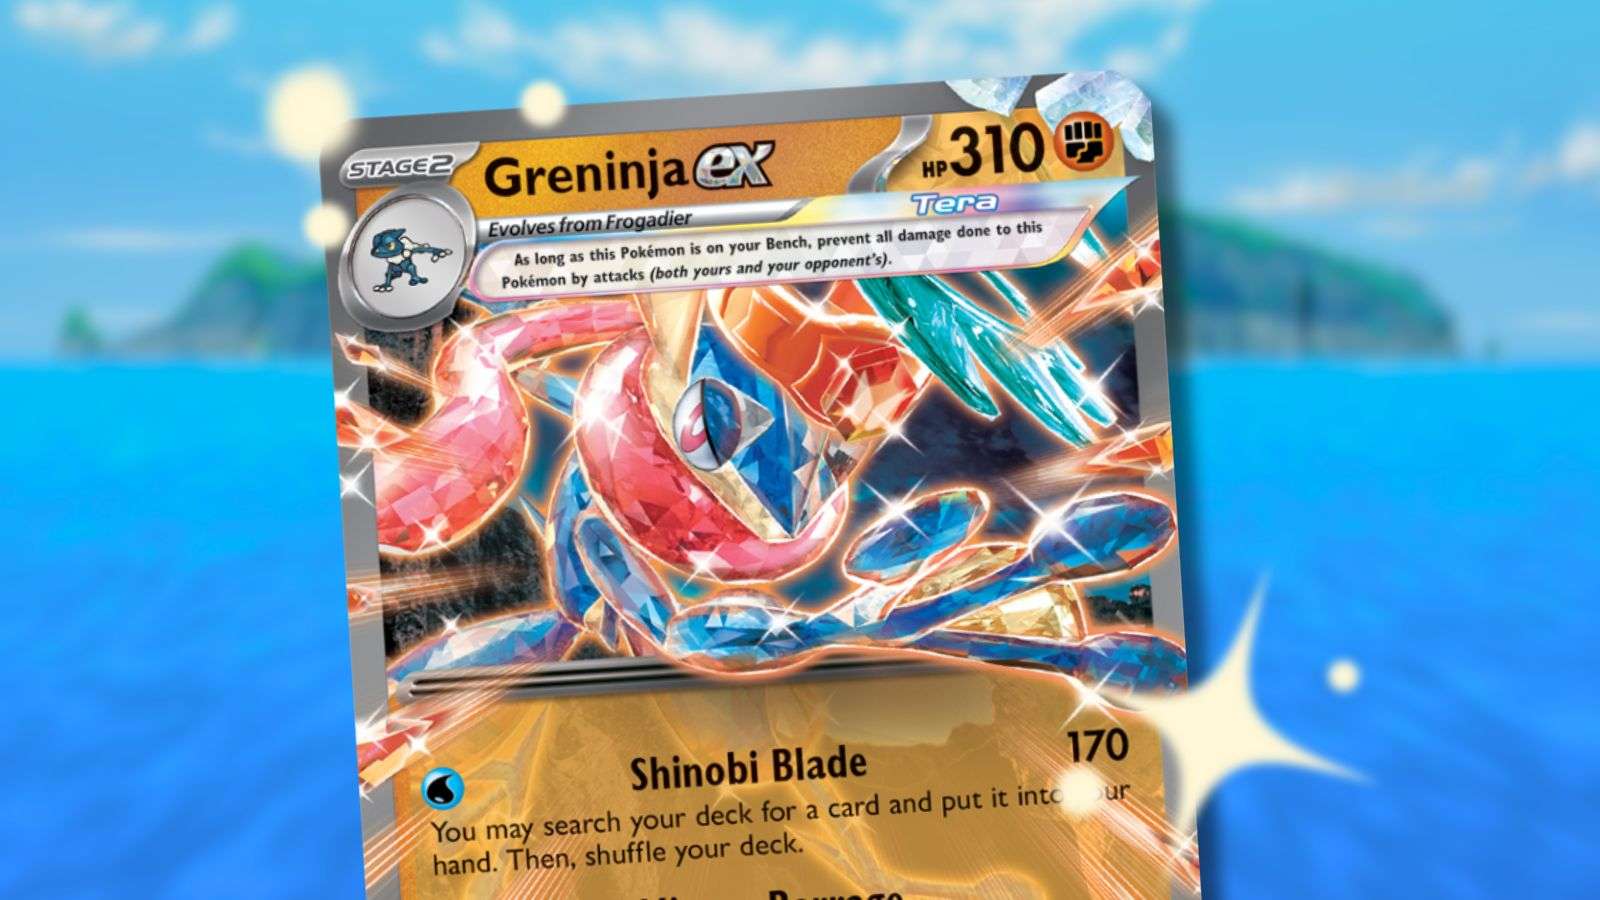 Greninja ex with Pokemon anime background and sparkles.